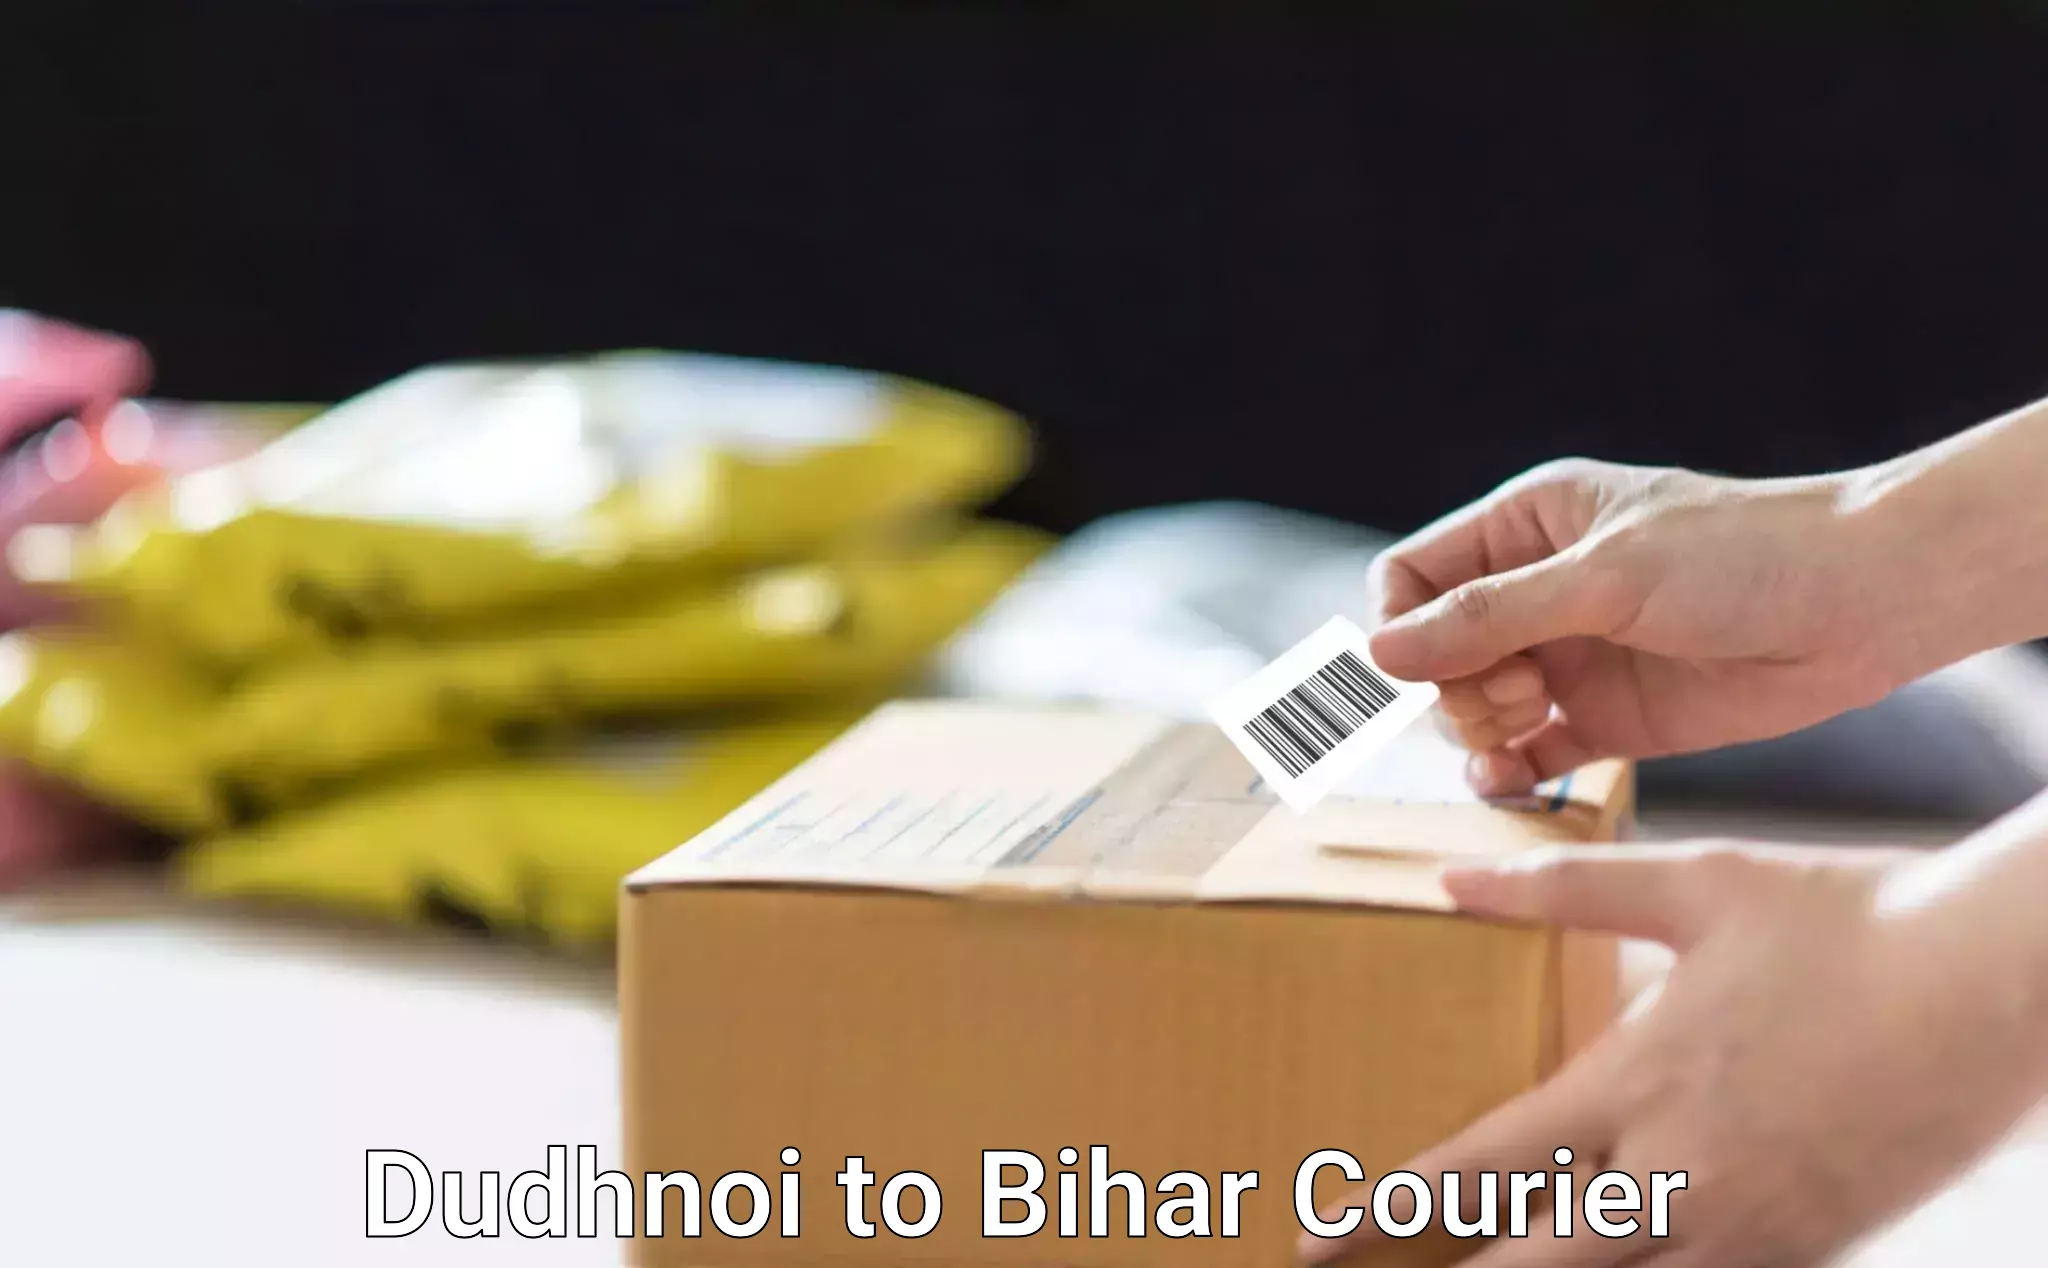 E-commerce fulfillment Dudhnoi to Bihar